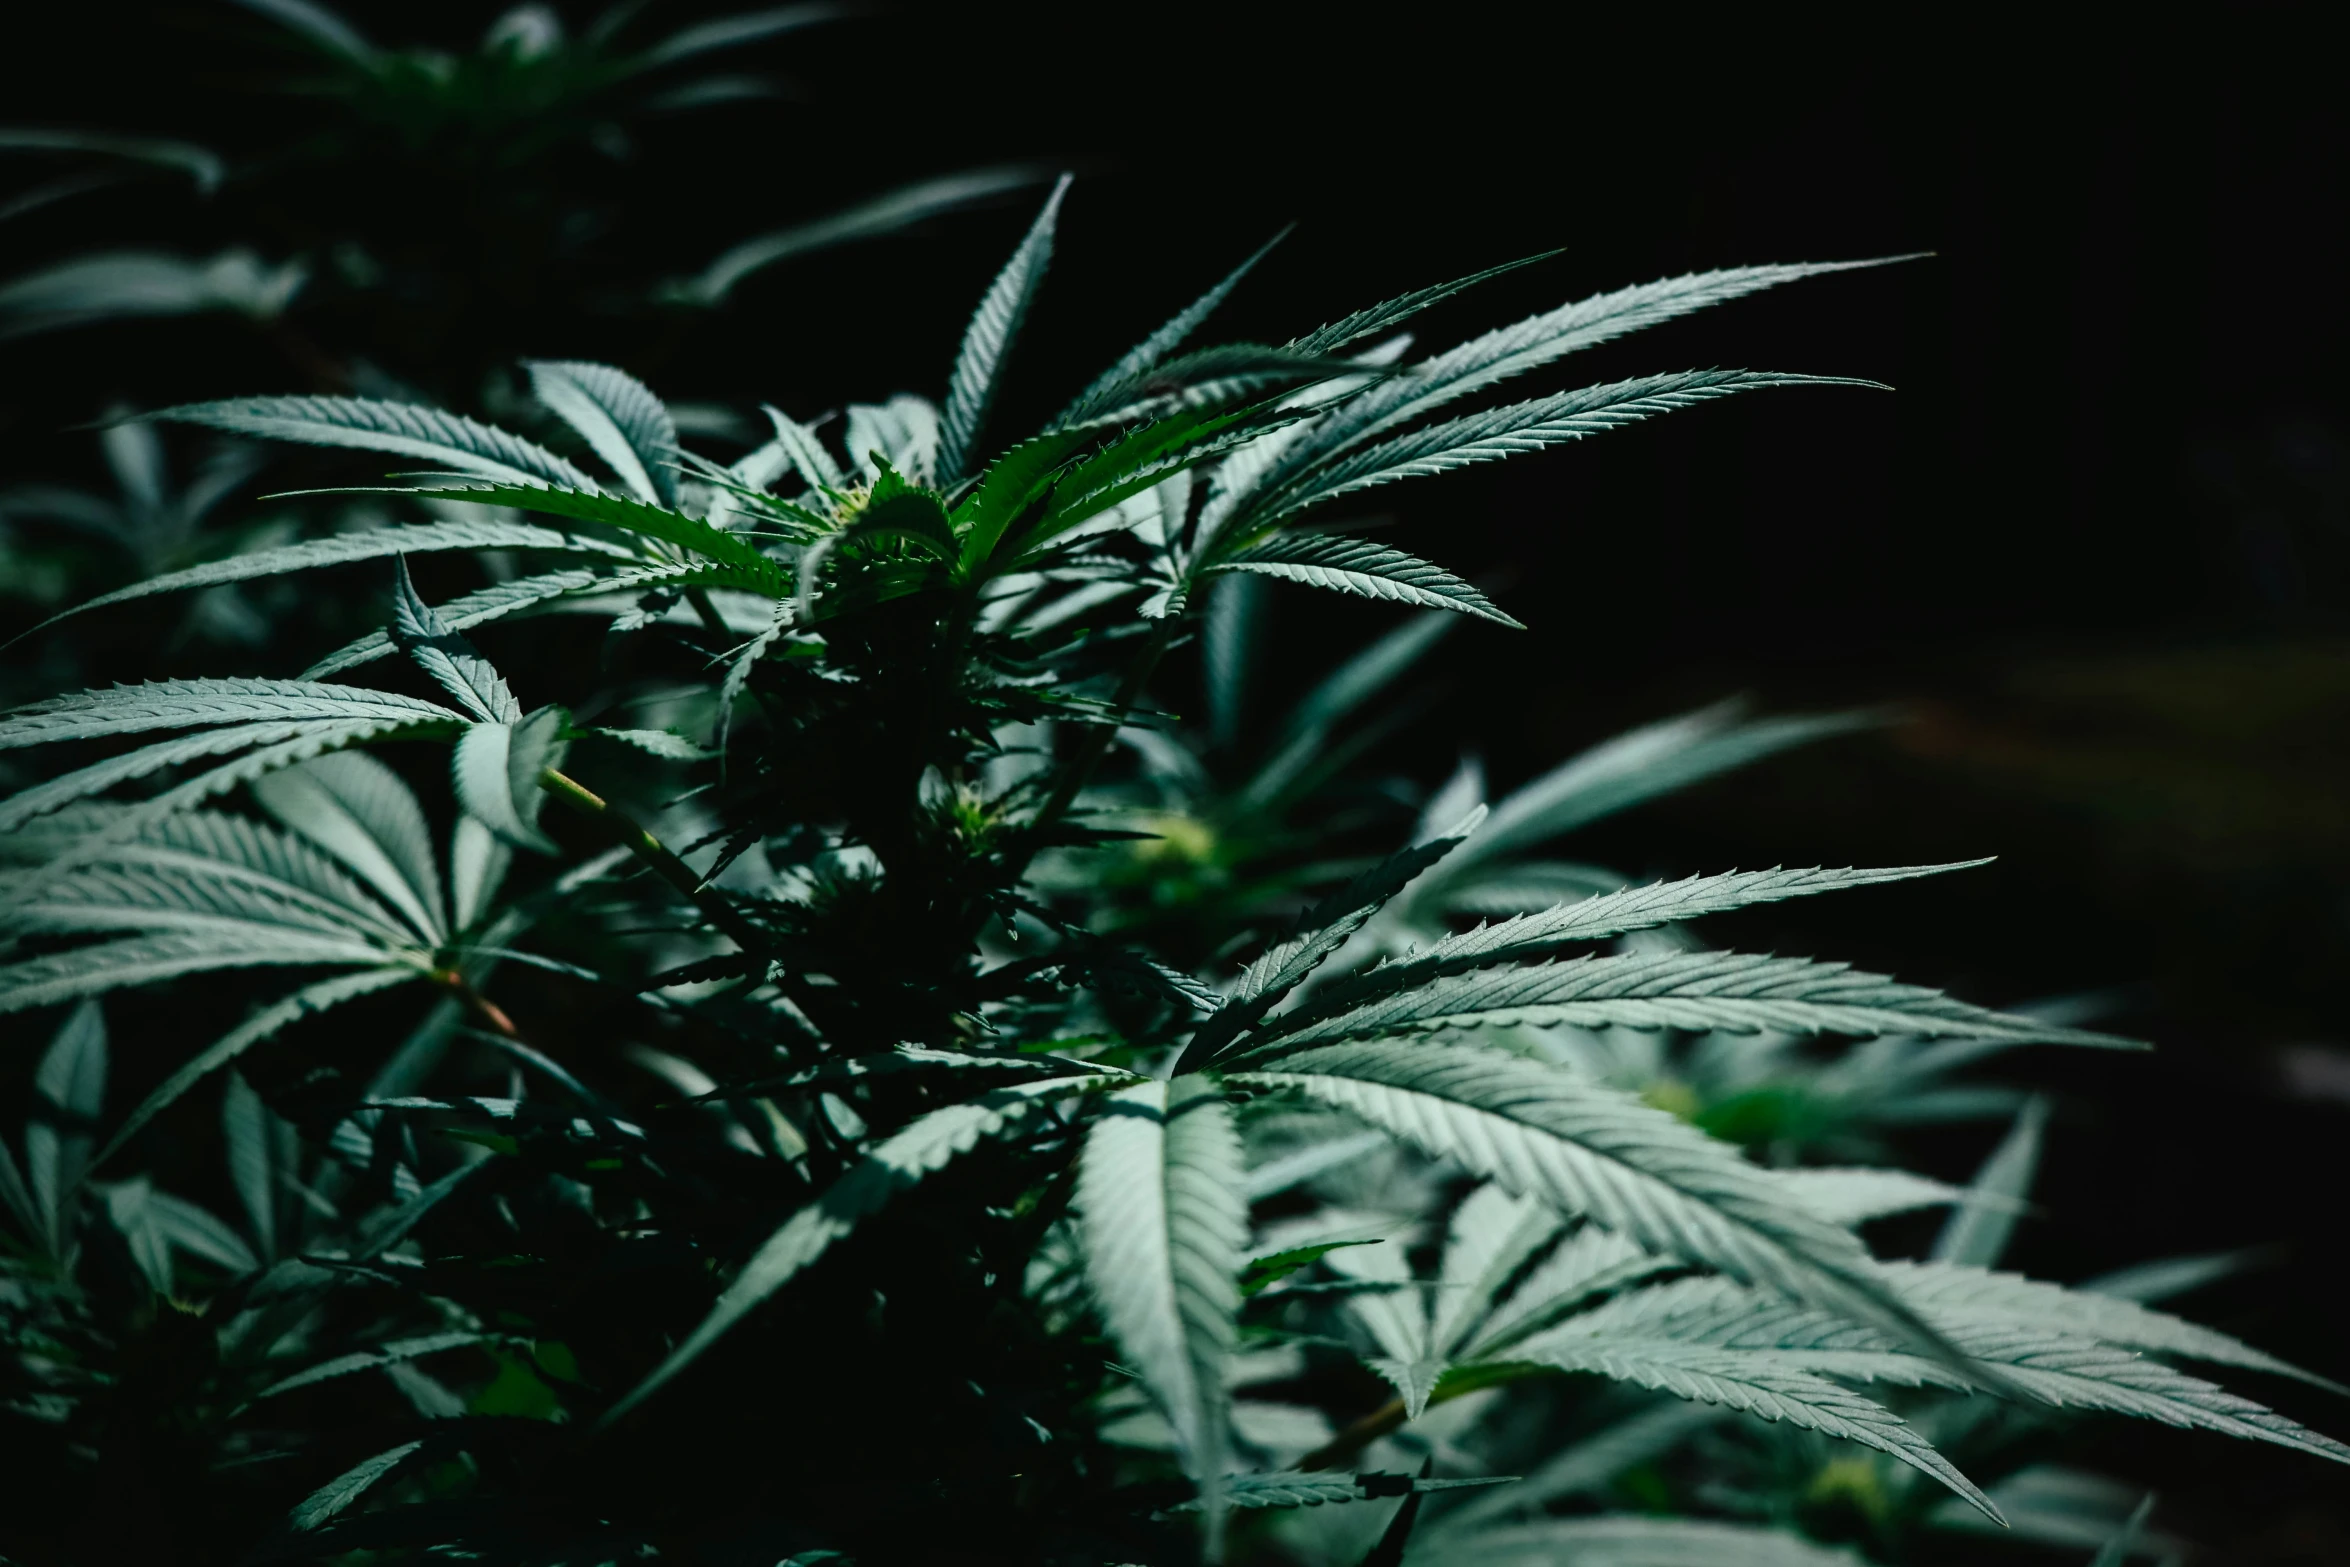 marijuana plants lit up at night with dark background